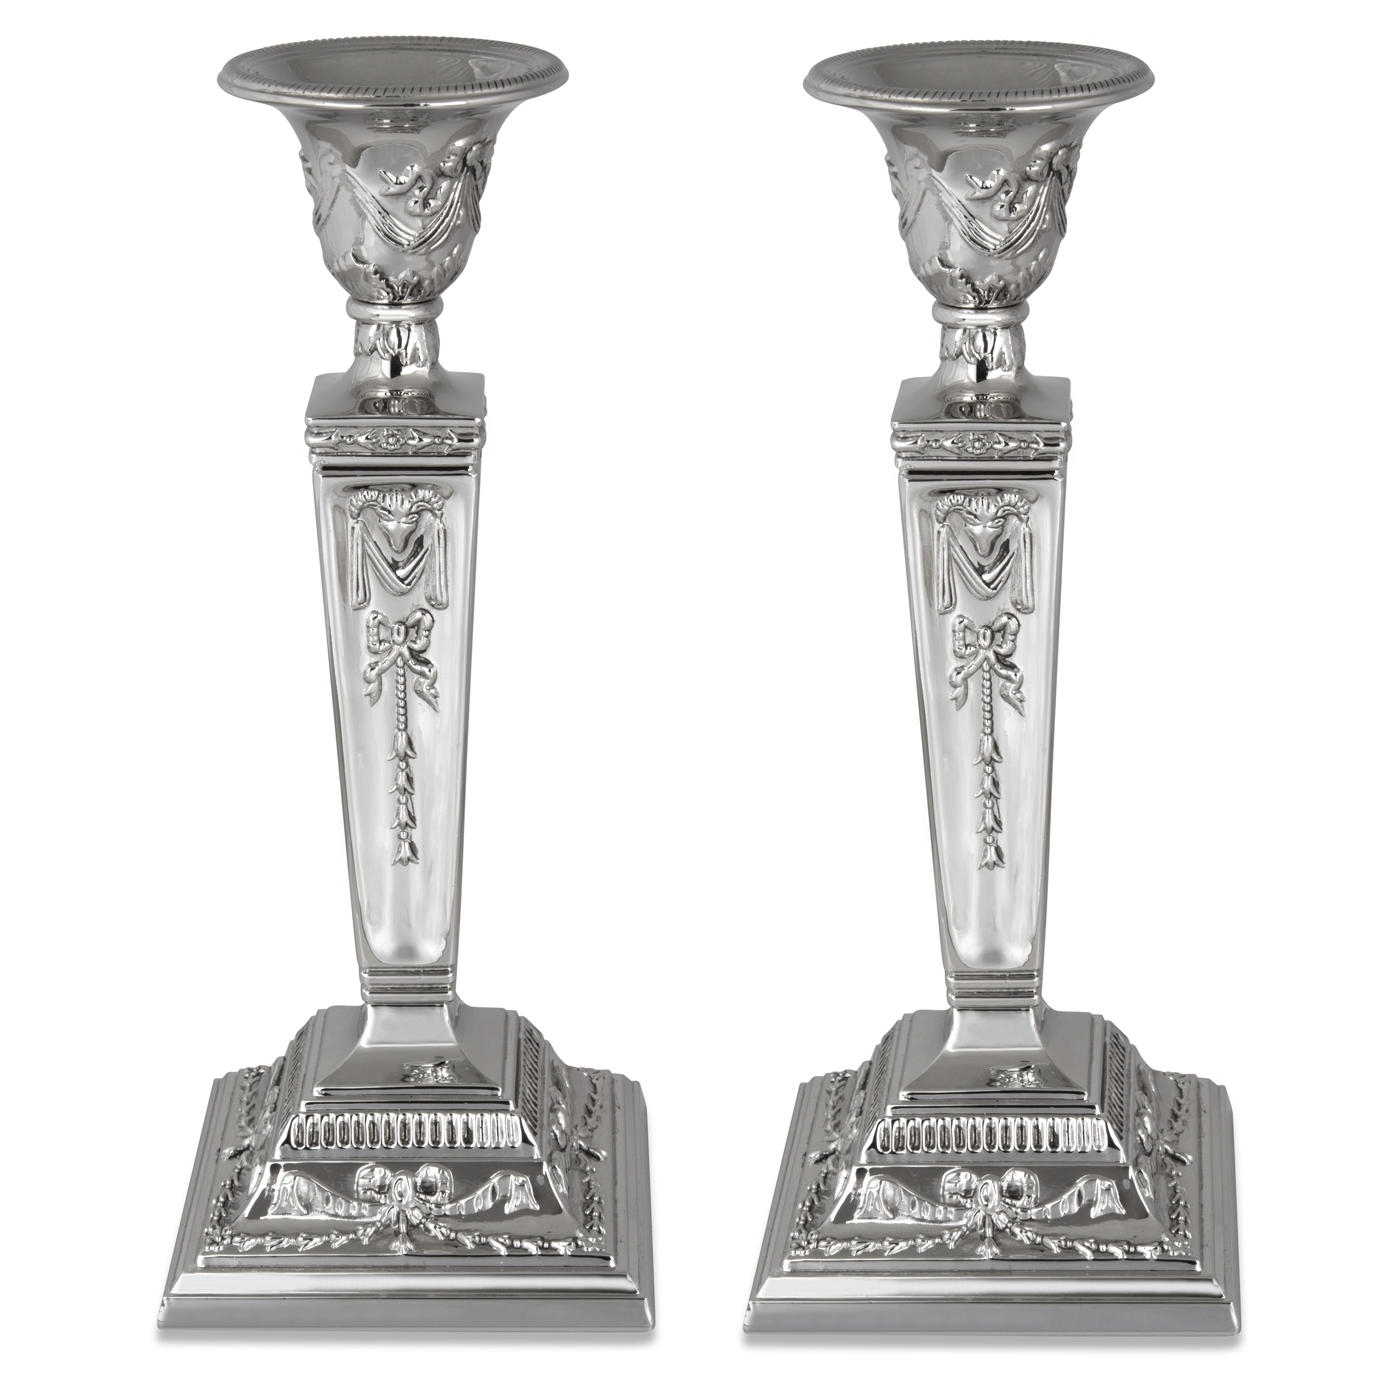 Nickel Plated Decorative Shabbat Candlesticks - 1